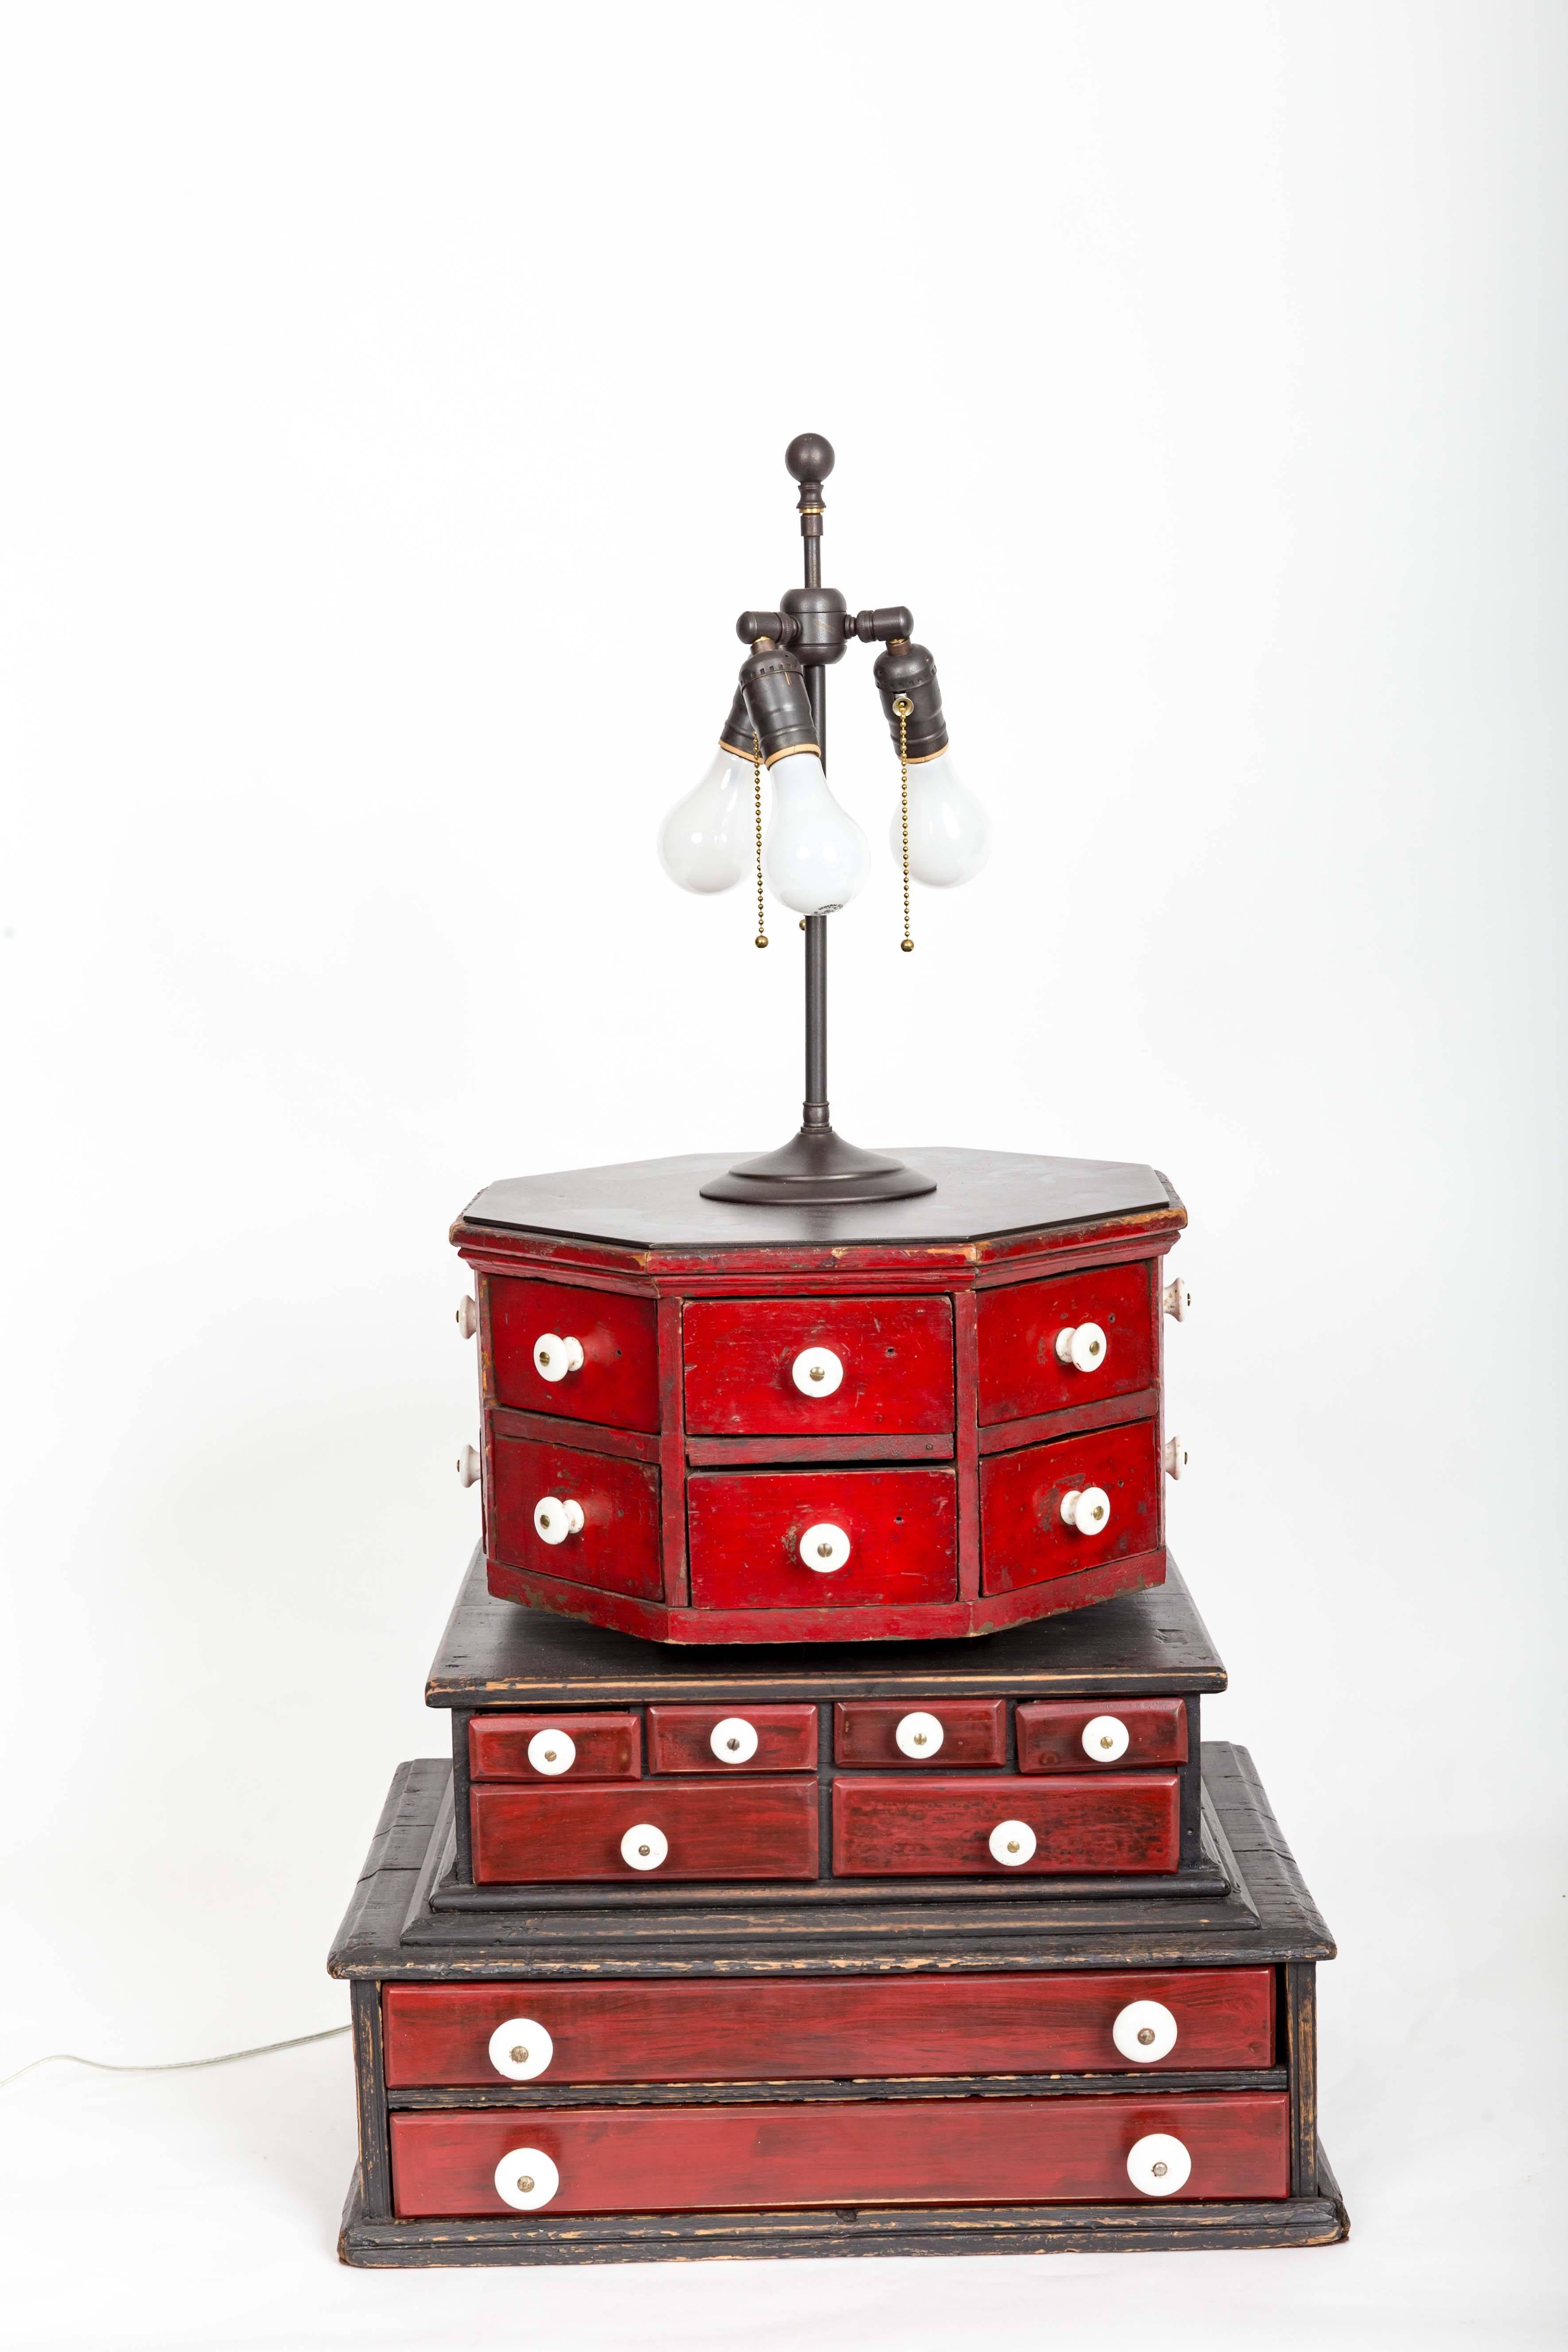 Custom one-of-a-Kind 'Diamond & Baratta' Sewing box lamp. Extra large-scale. Original Paint and Finish. Galvanized drawers. Porcelain pulls. Custom grosgrain shade.
Quintessential 'Diamond Baratta' design!

Shade: 28.5